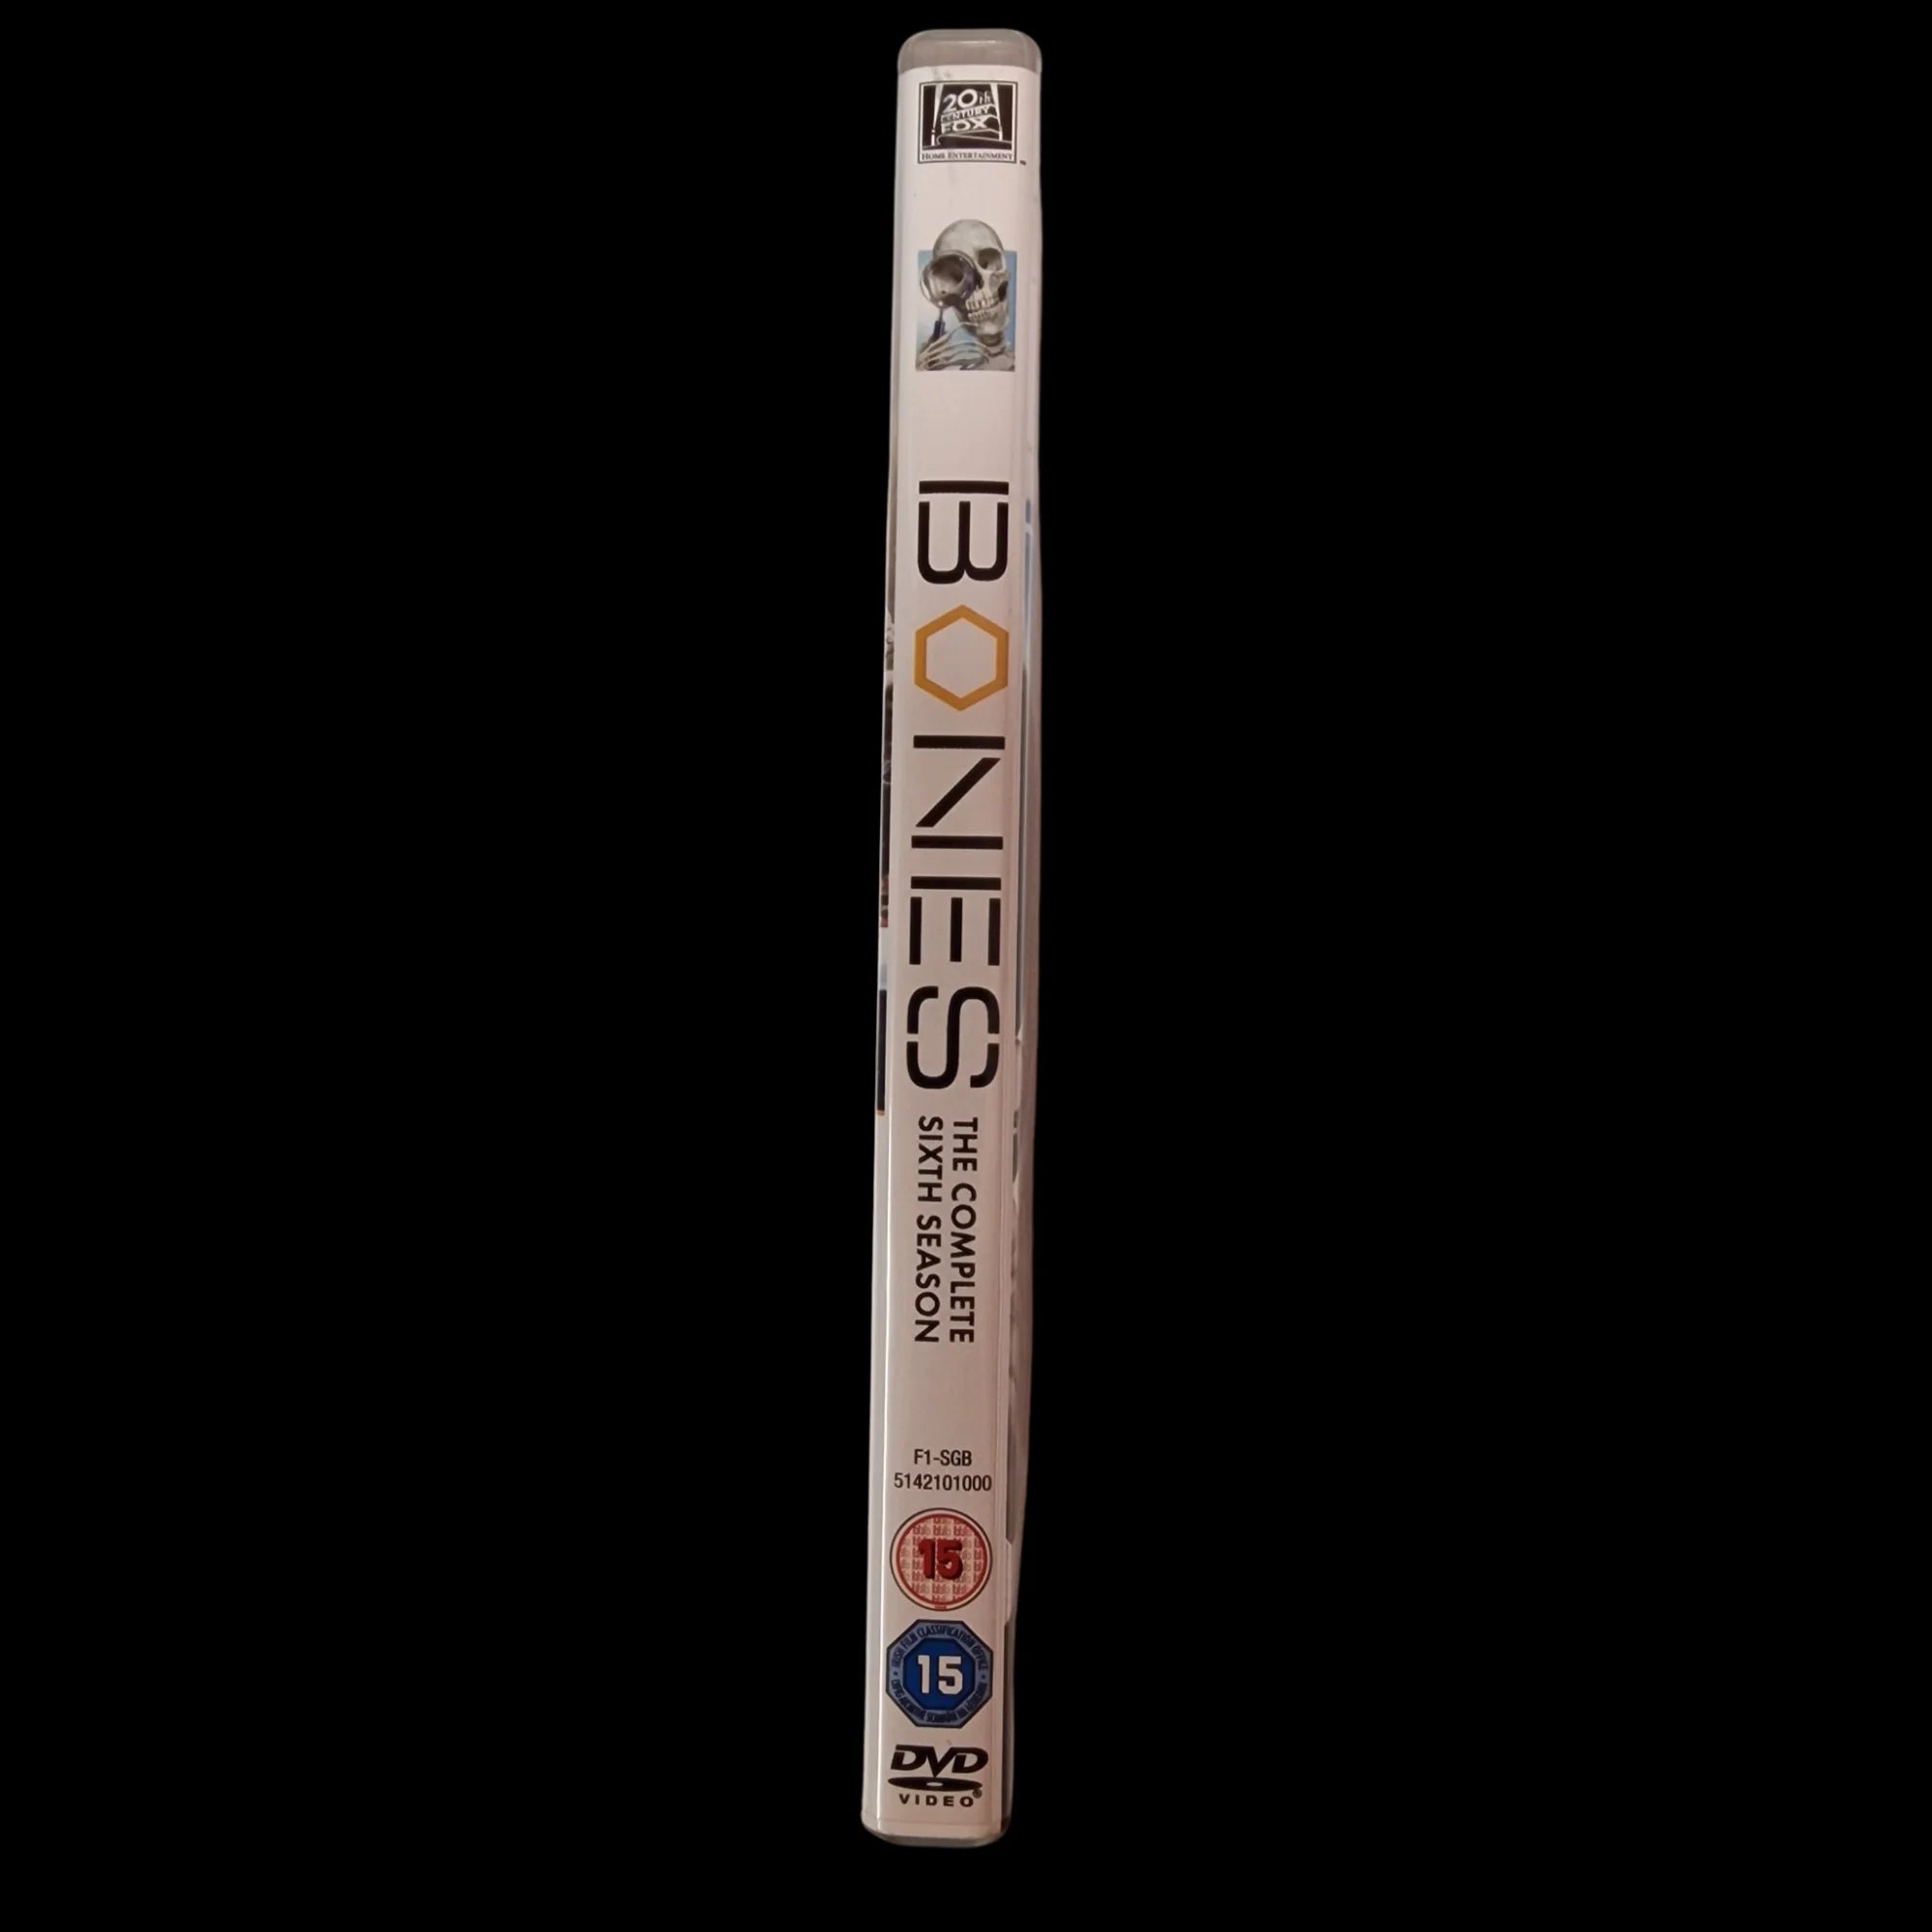 Bones Season 6 (dvd) - Preloved - DVD - Twentieth Century